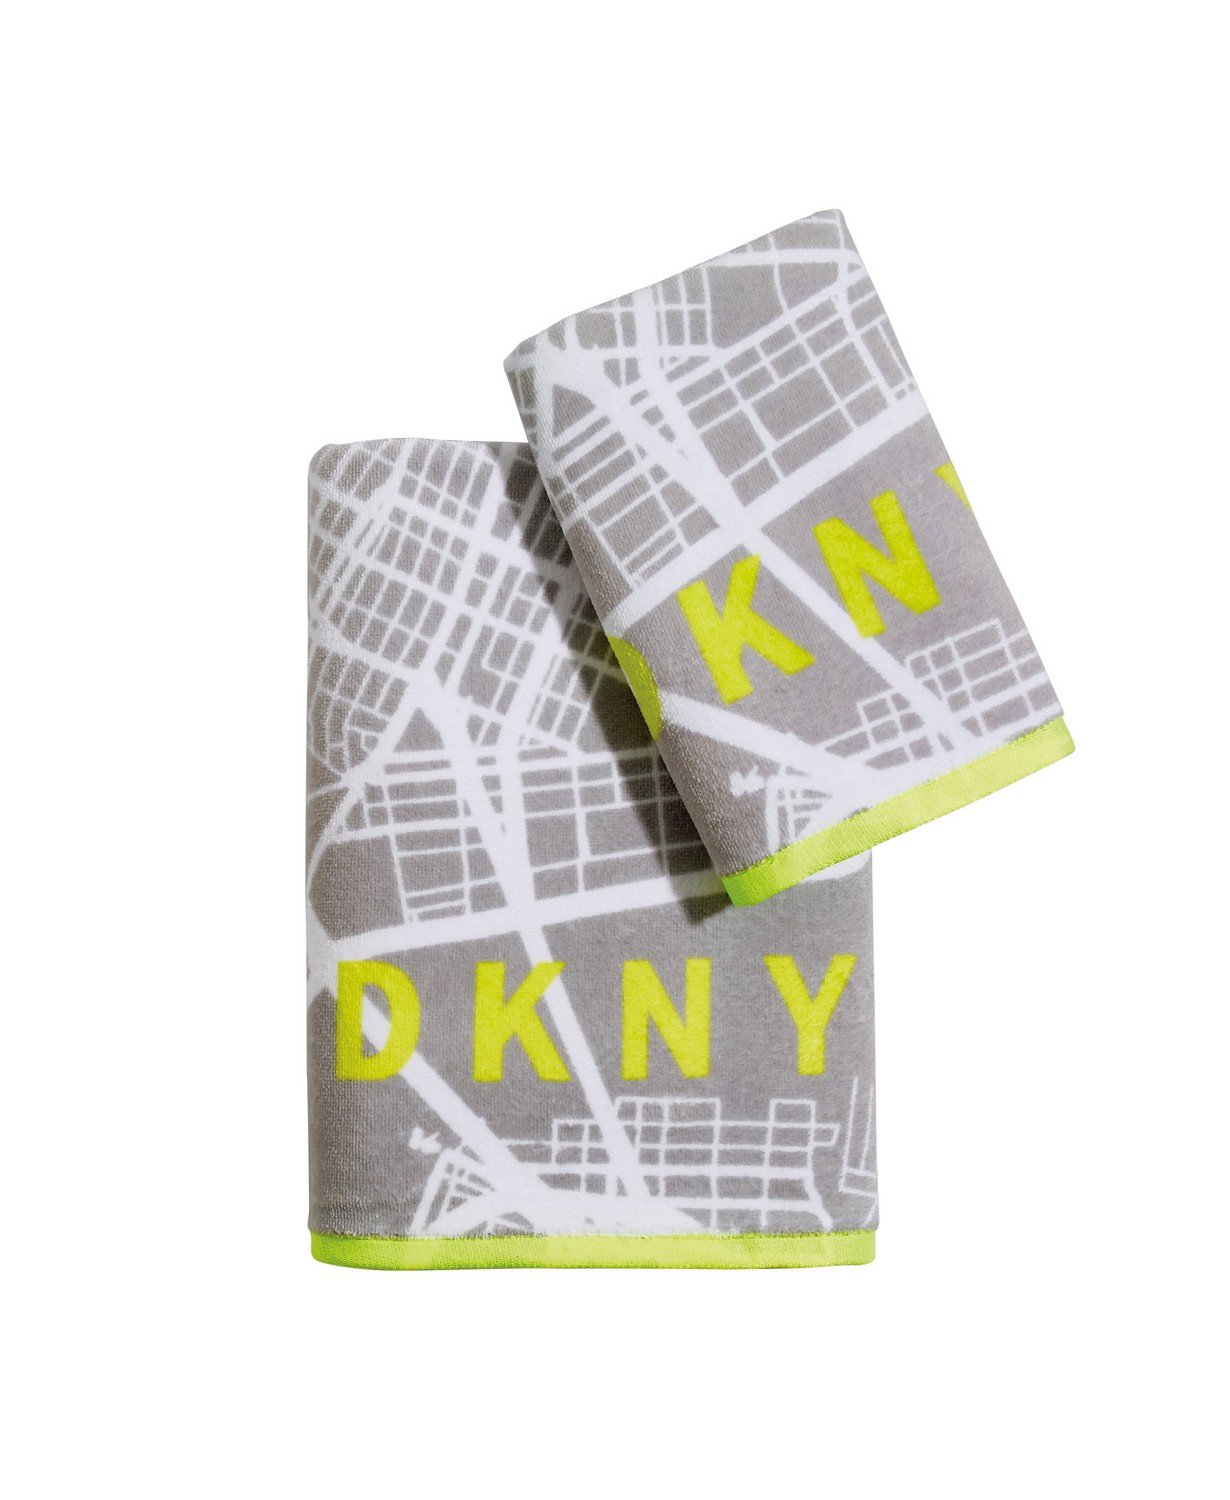 DKNY City Map Bath Towel - 155 AED